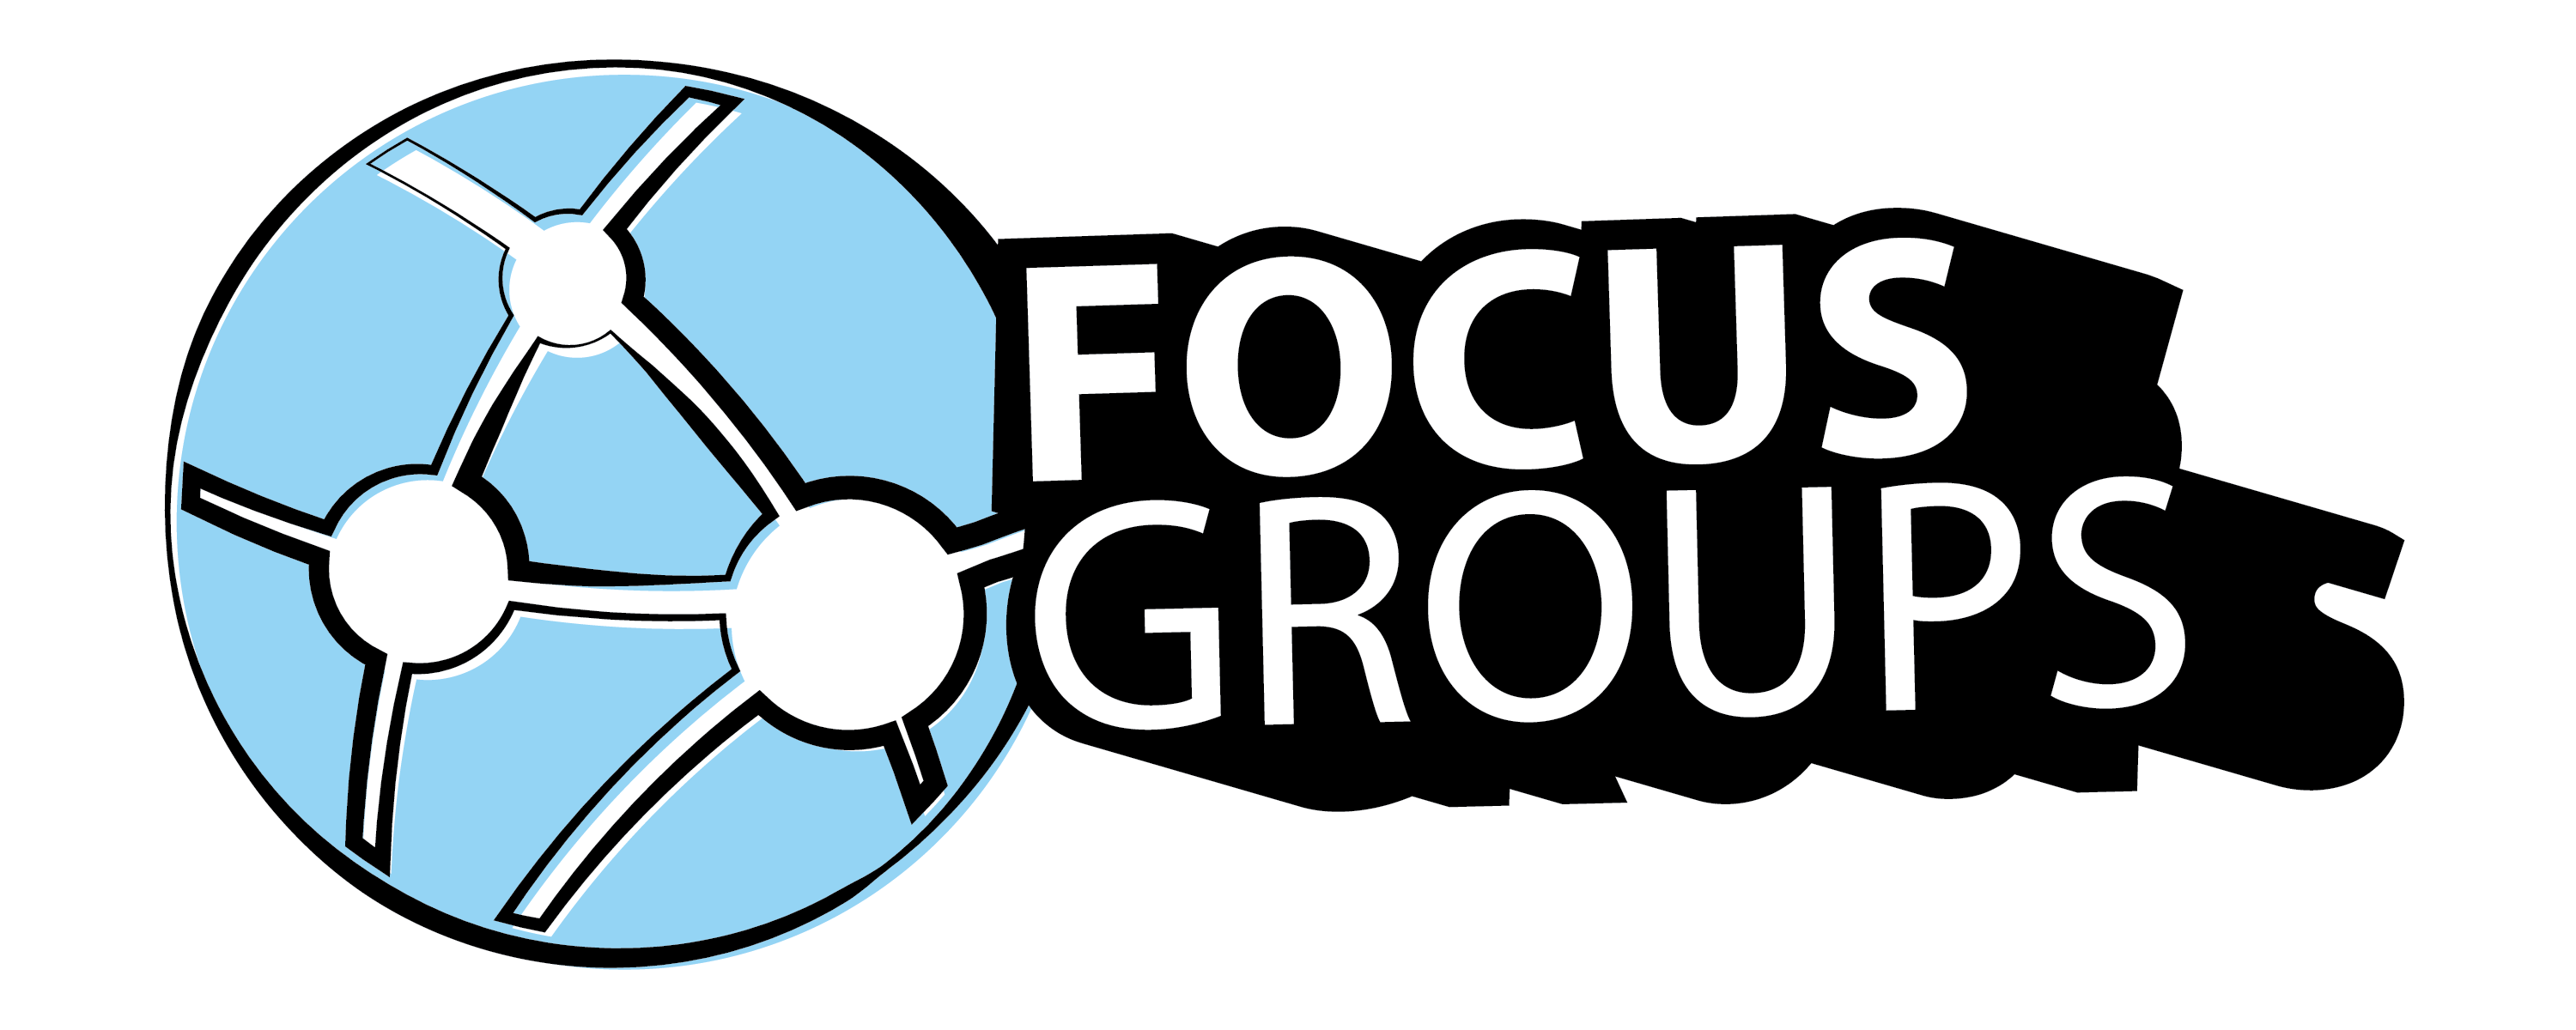 organization clipart focus group